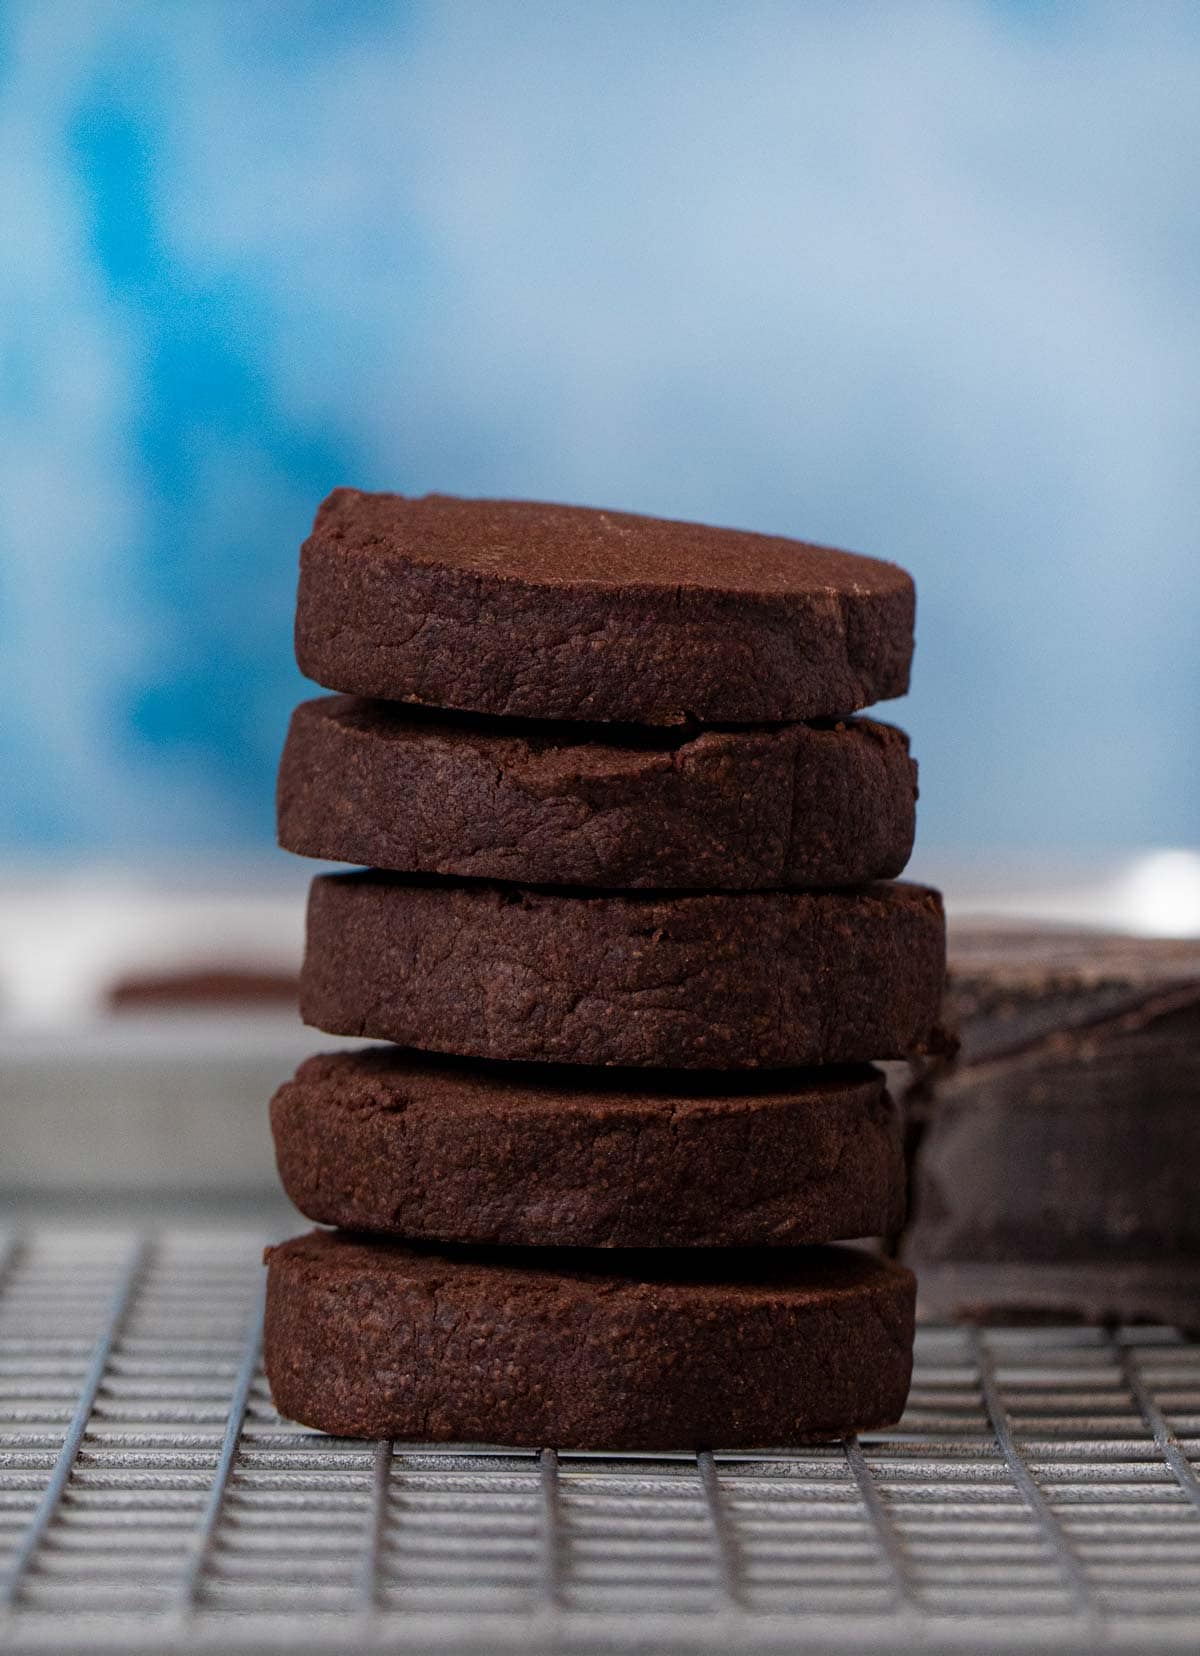 Chocolate Shortbread Cookies in stack